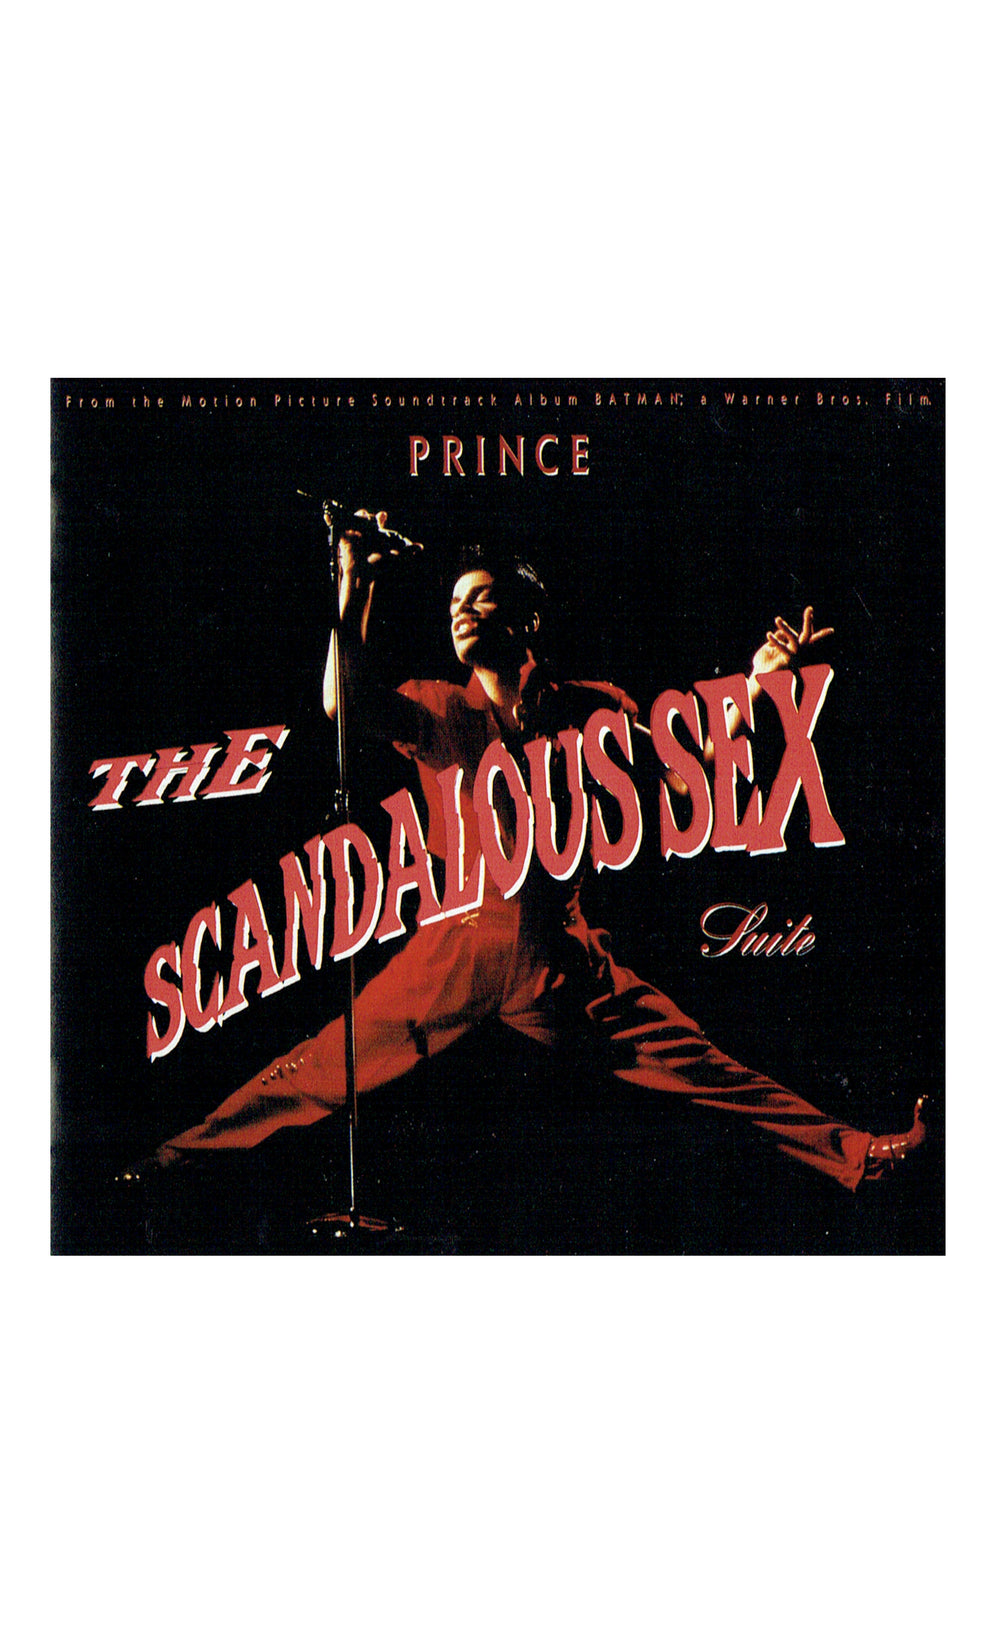 Prince Scandalous Sex Suite Japan CD Single 1989 Maxi 9 Tracks WITH OBI EX/MINT